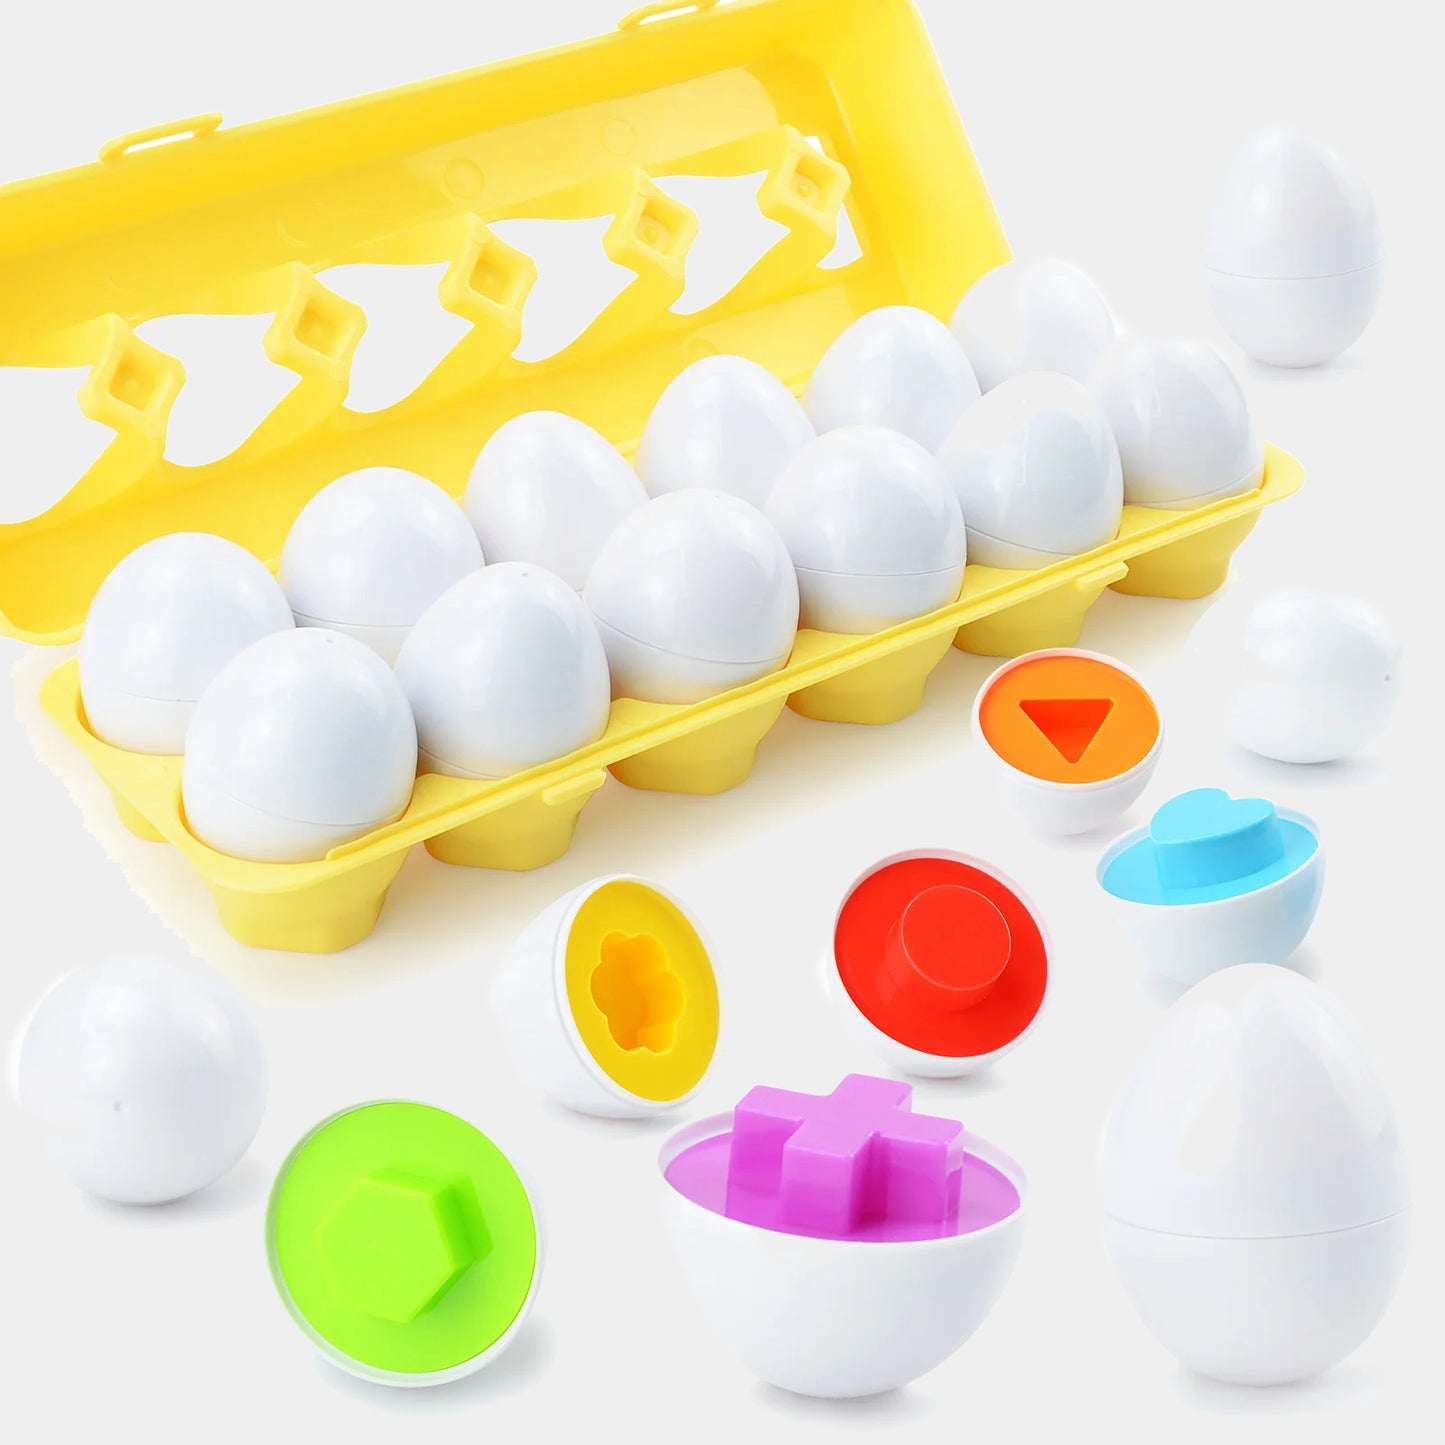 Children pair smart eggs